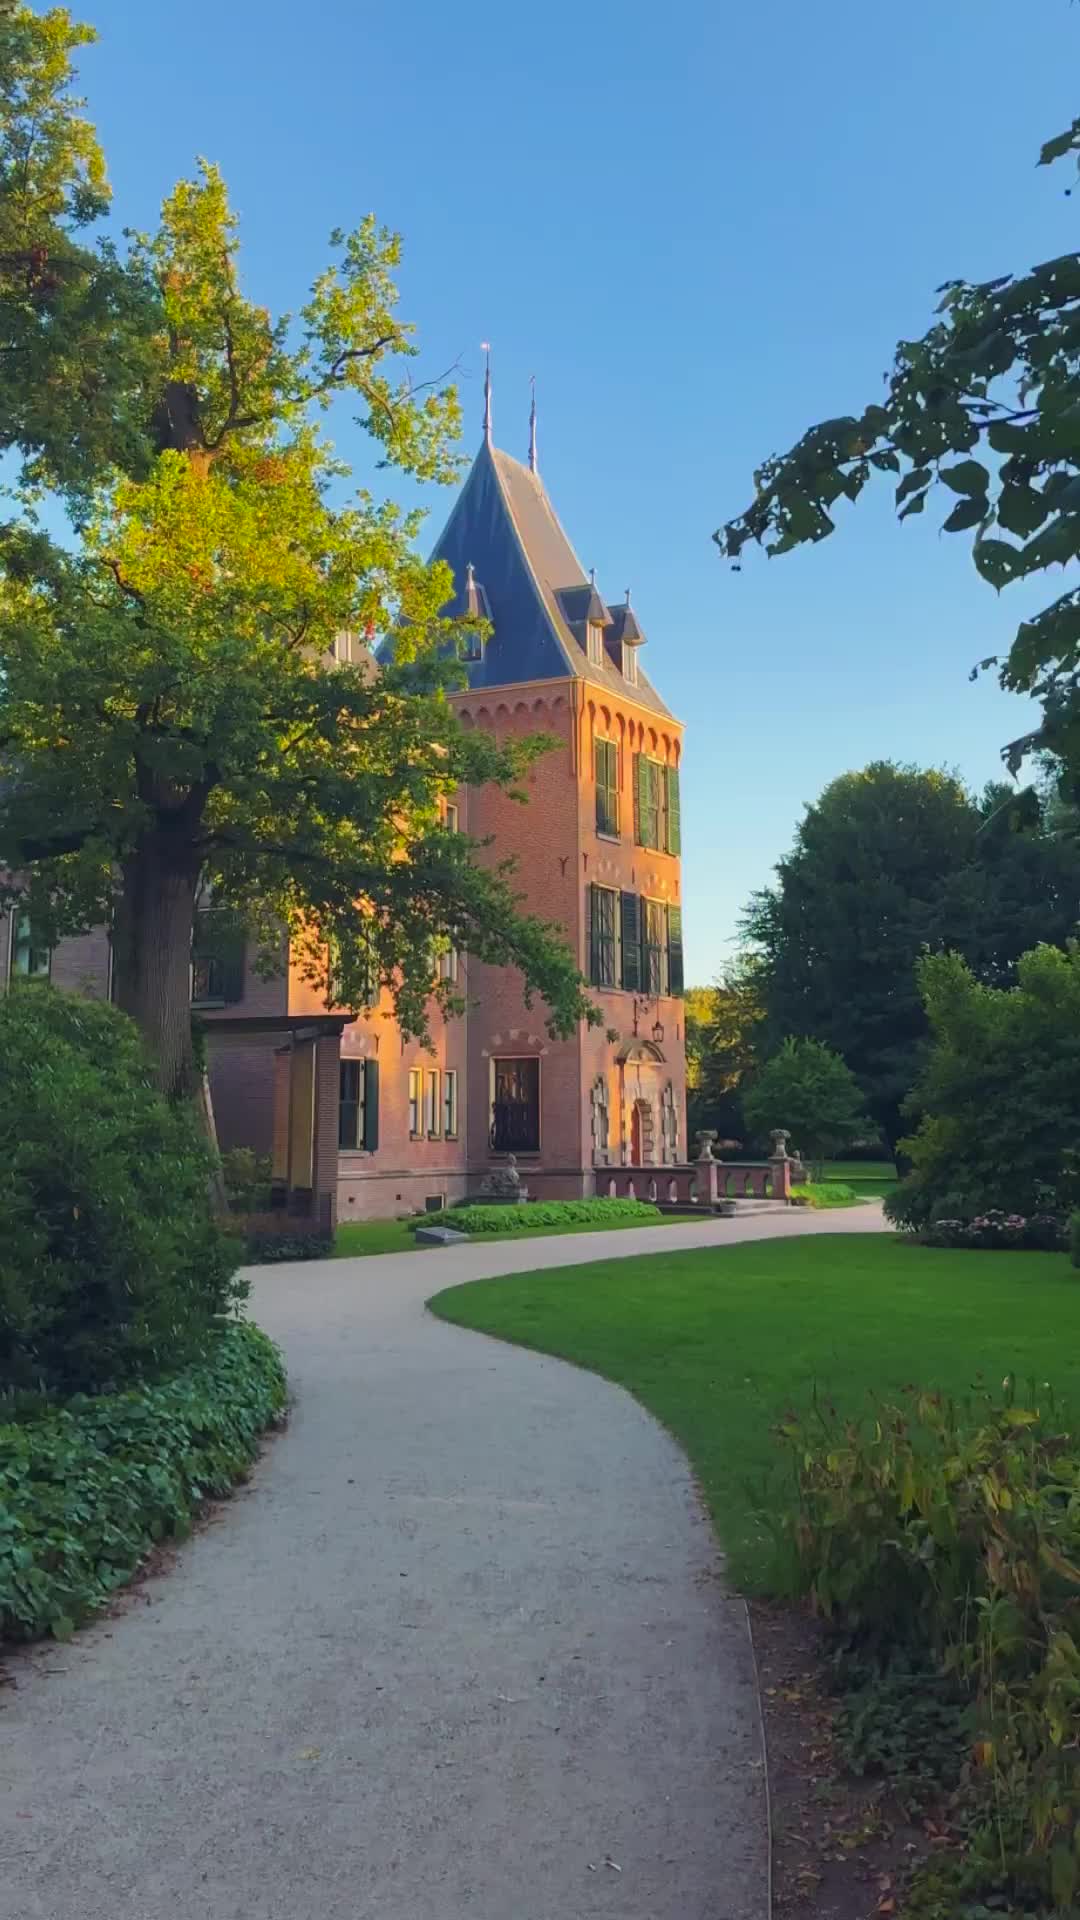 Explore Keukenhof Castle in Lisse, Netherlands